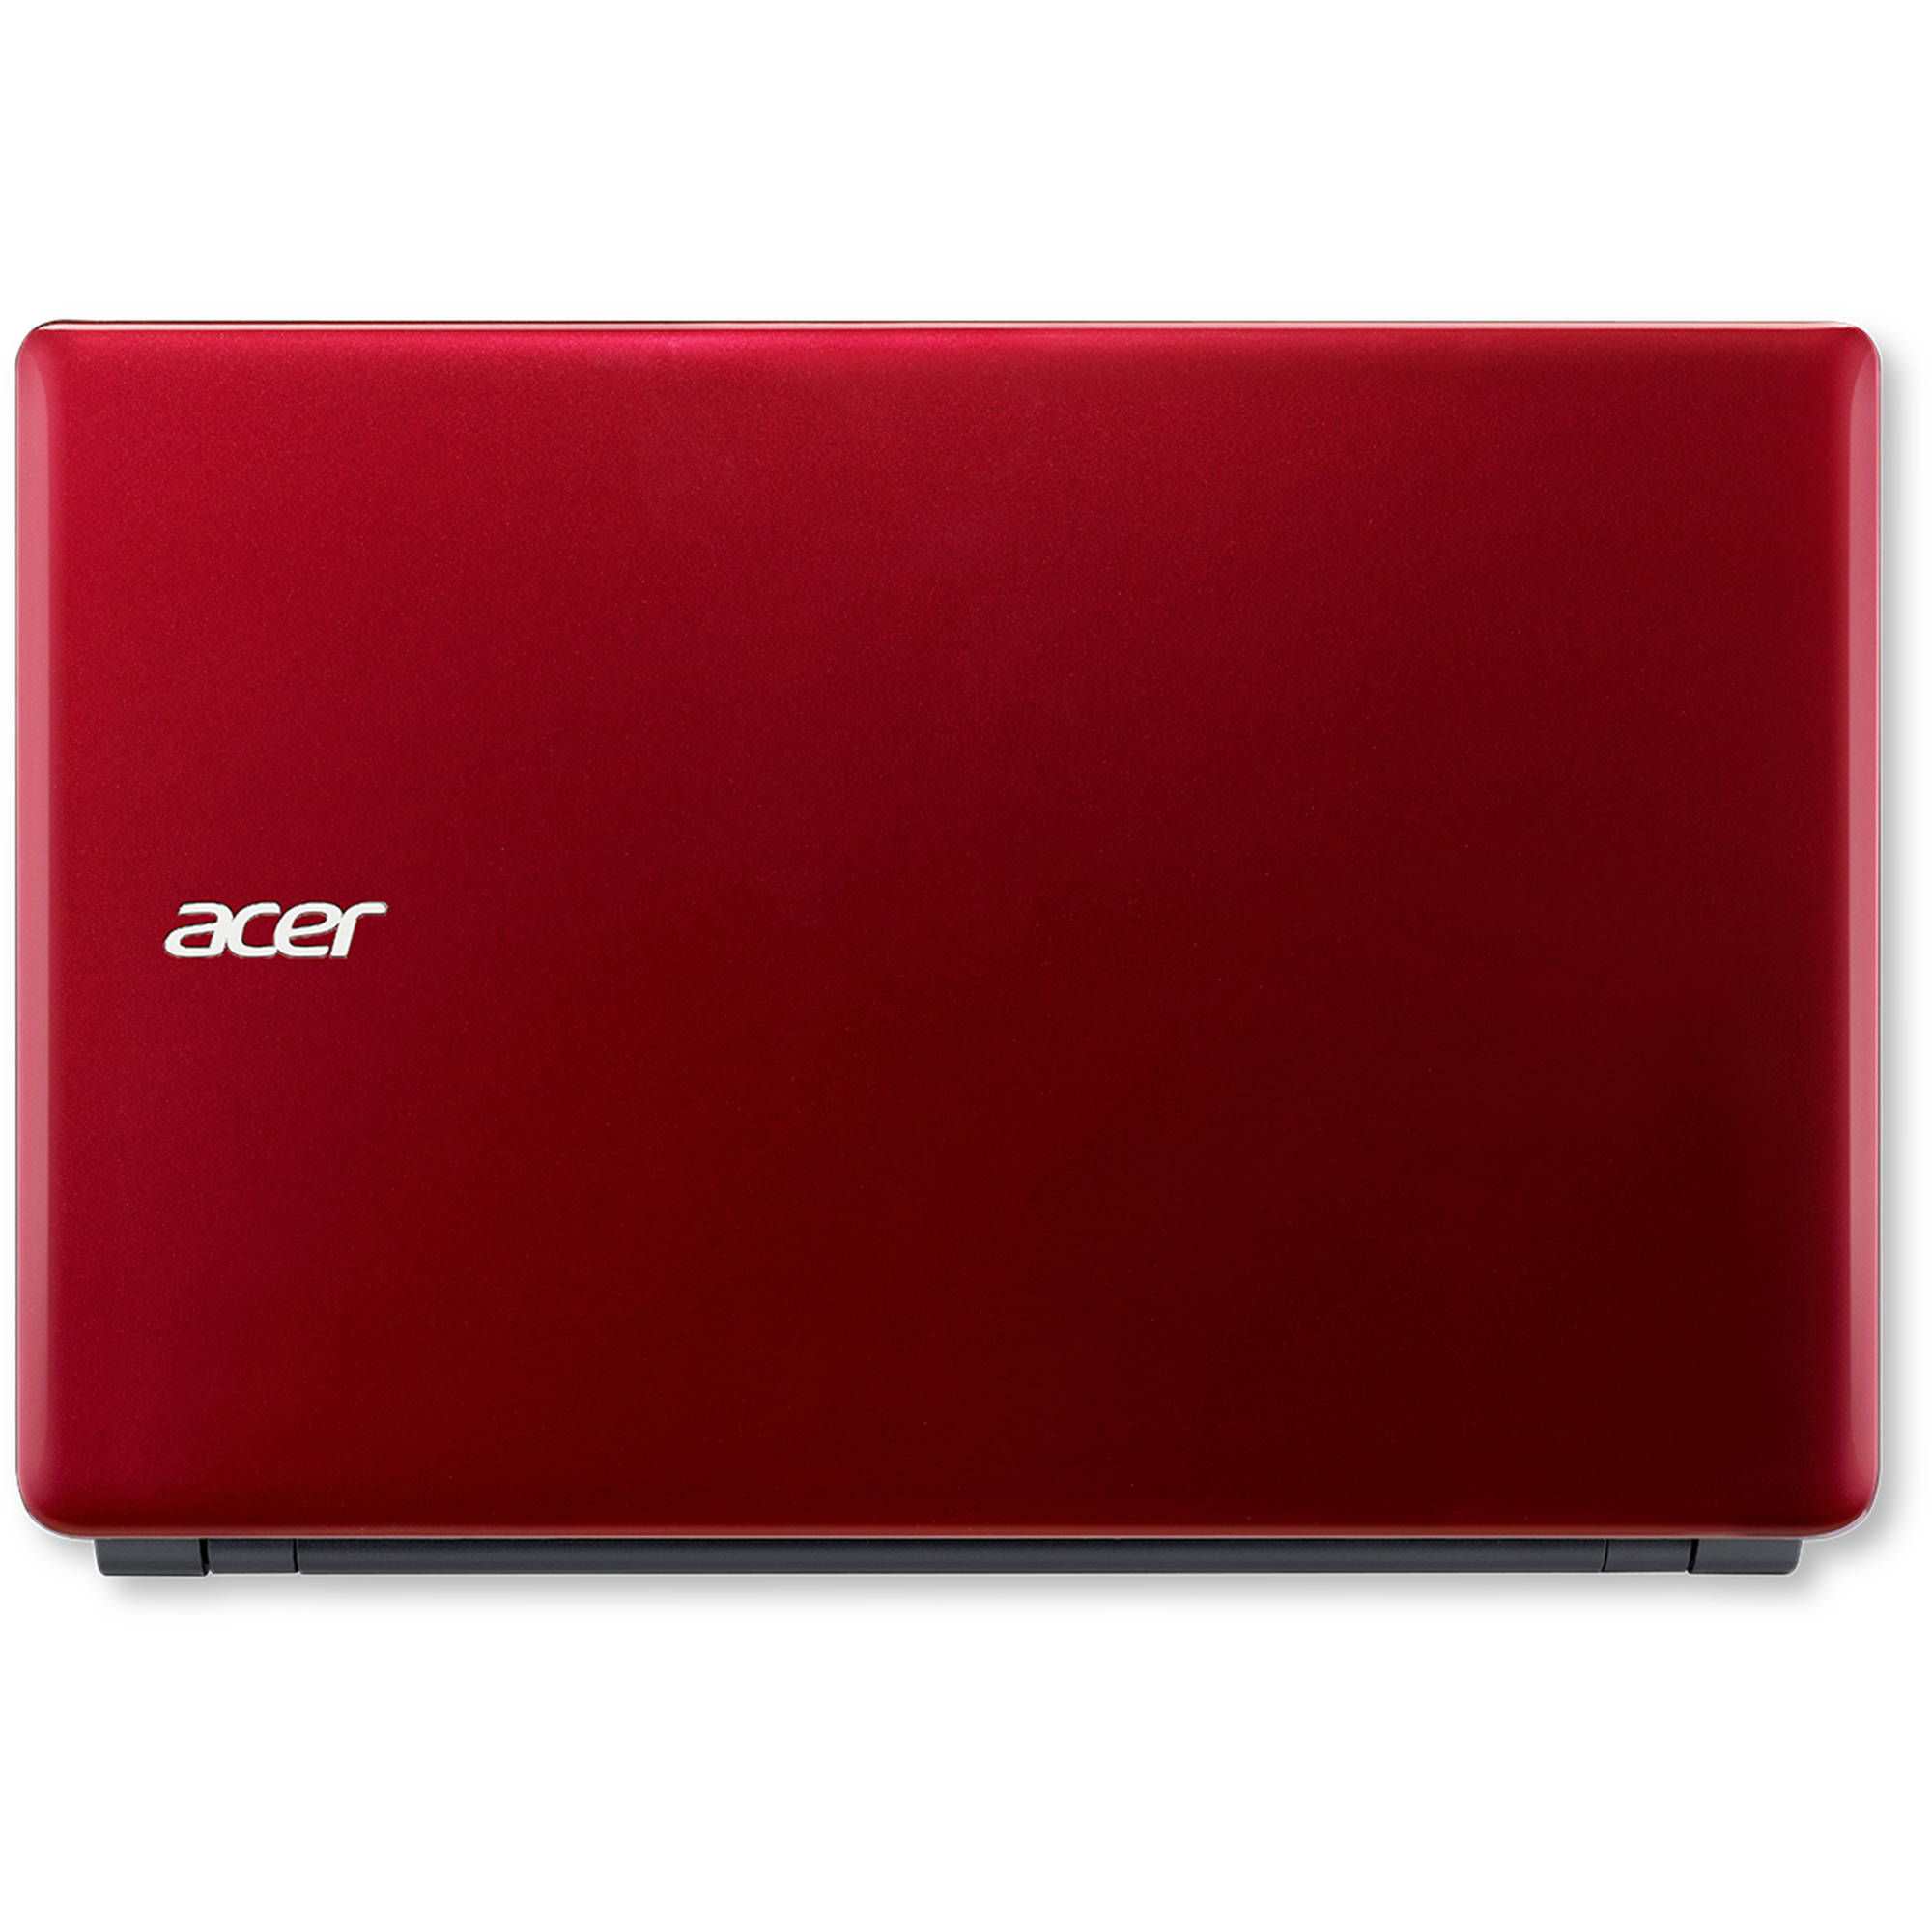 Acer Aspire 15.6" Laptop, Intel Core i3 i3-4010U, 500GB HD, DVD Writer, Windows 7 Home Premium, E1-572-34014G50Mnrr - image 2 of 3